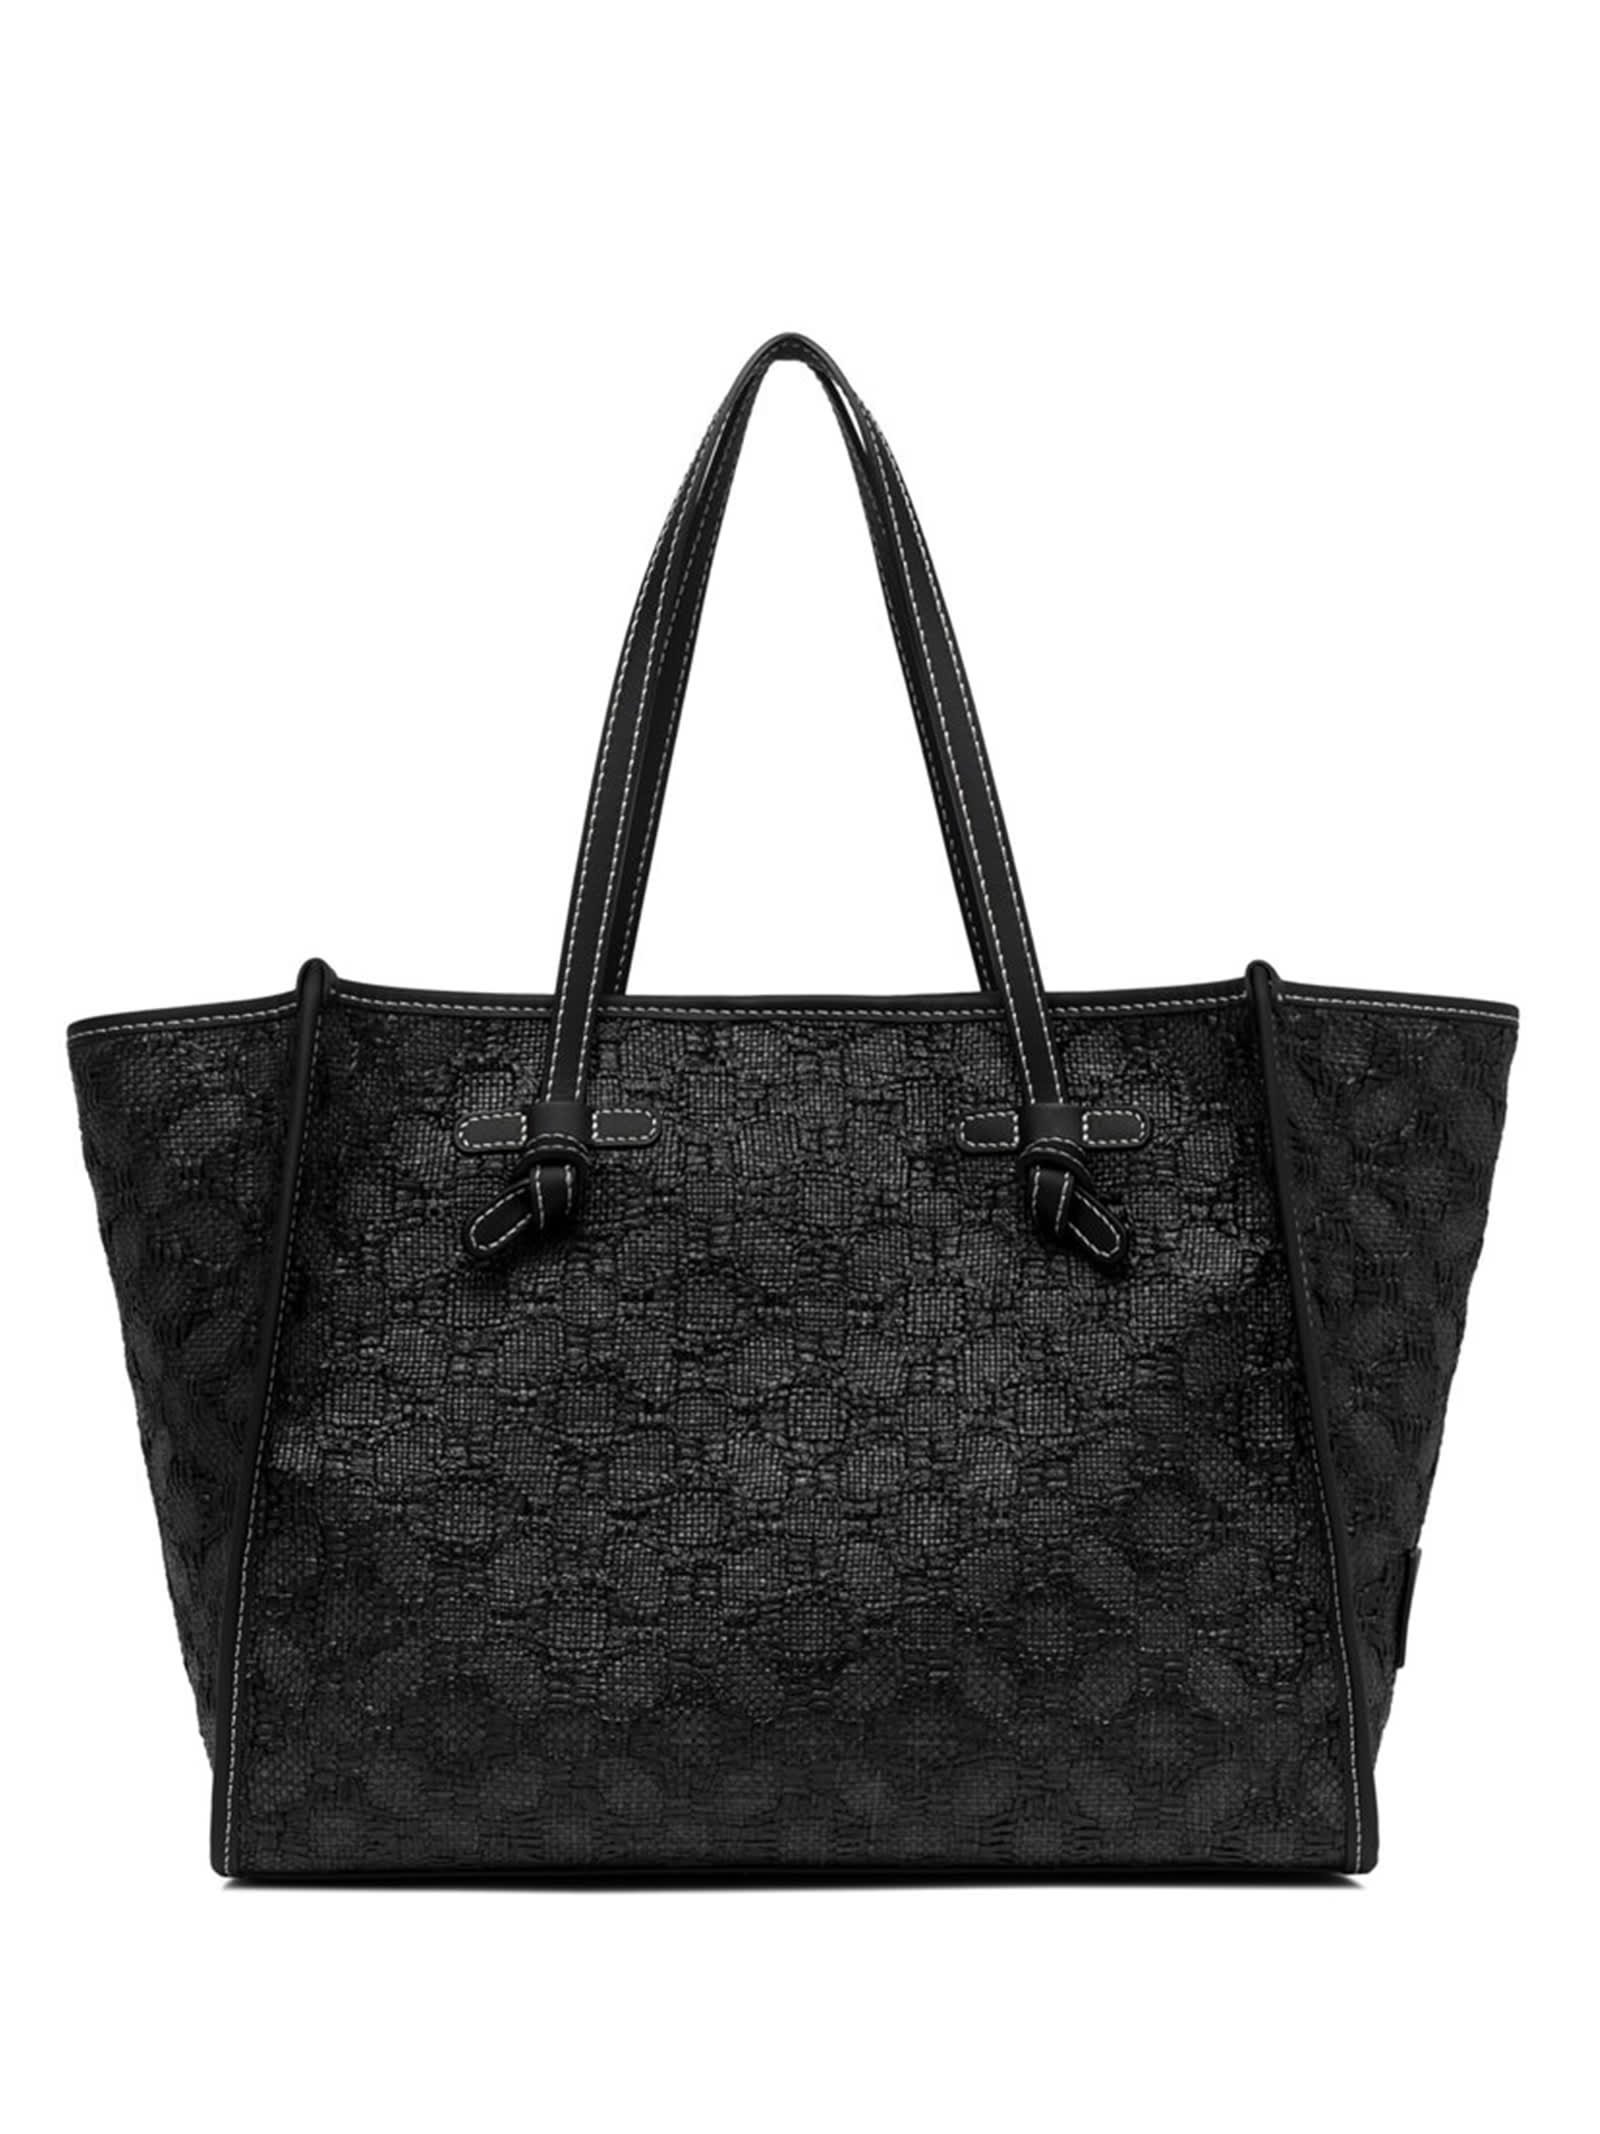 Marcella Black Woven Straw Shopping Bag